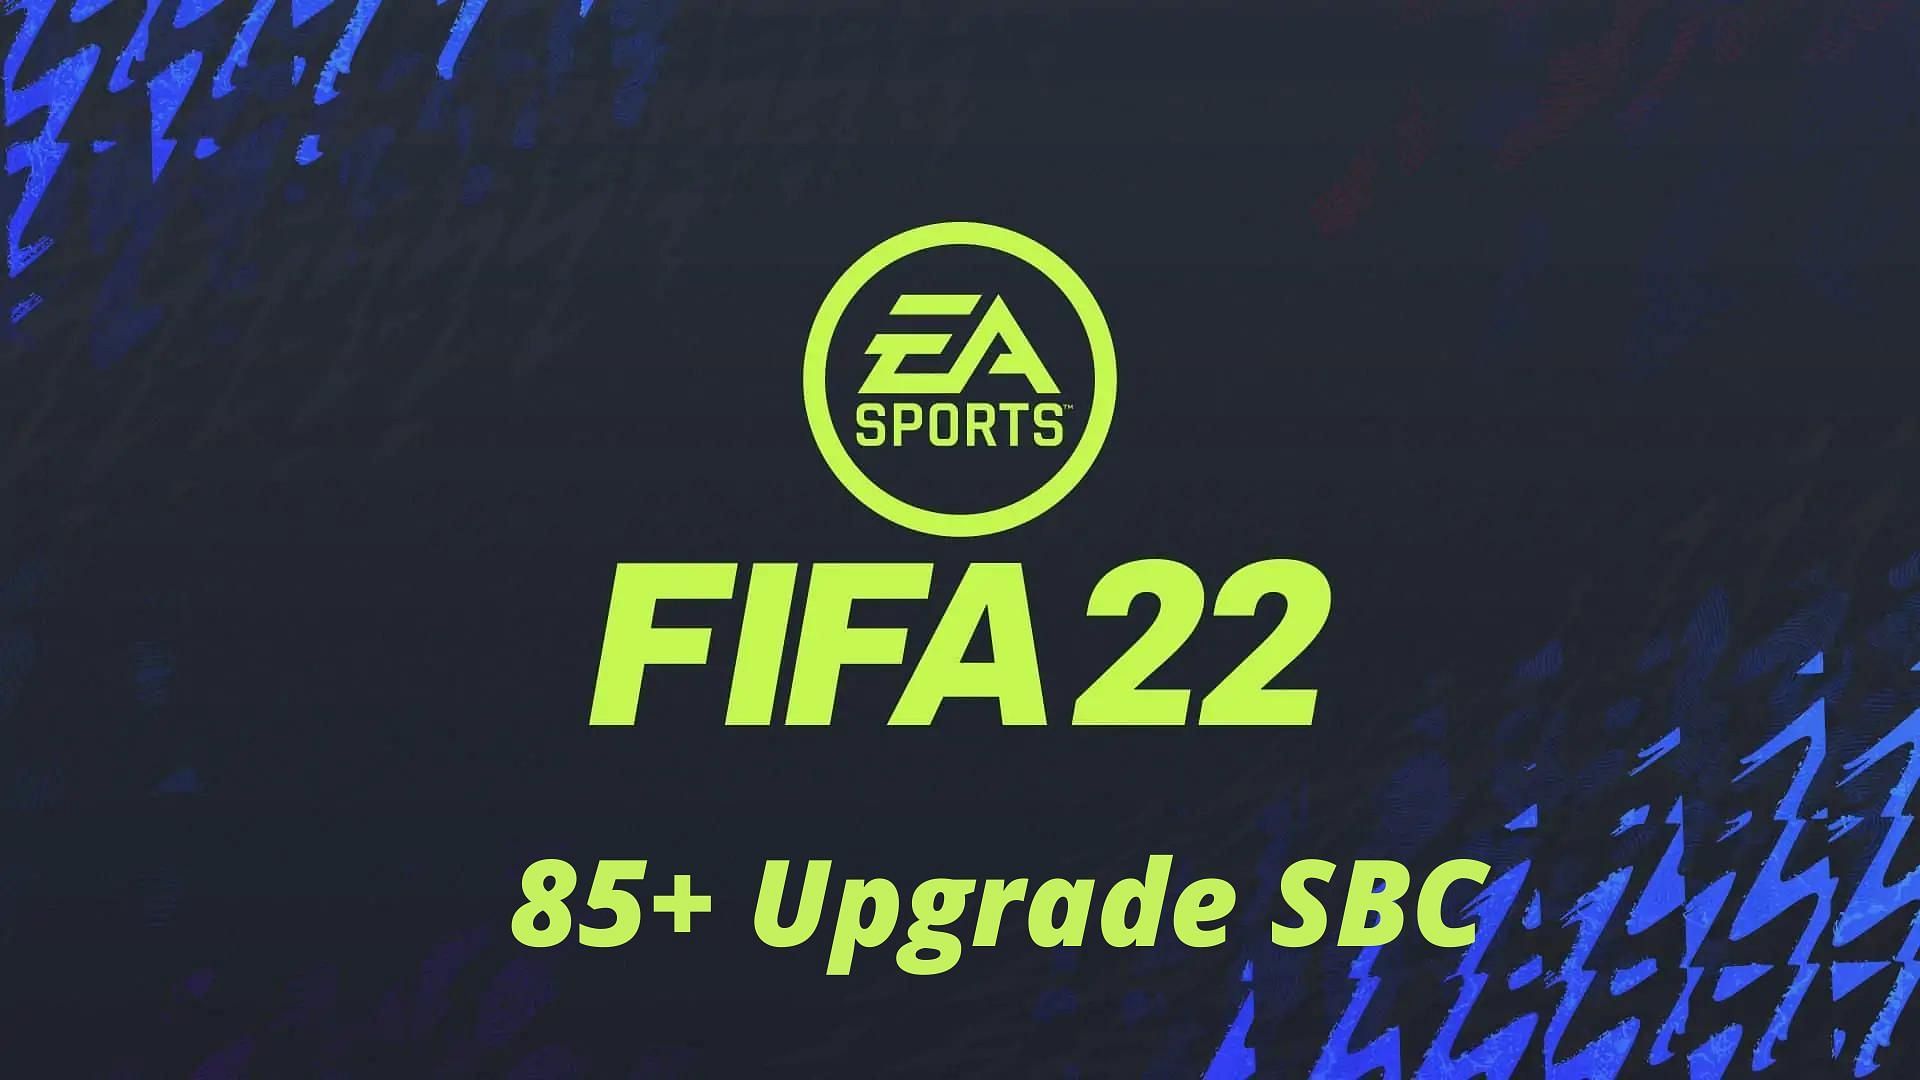 85+ Upgrade SBC is live in FIFA 22 (Image via Sportskeeda)